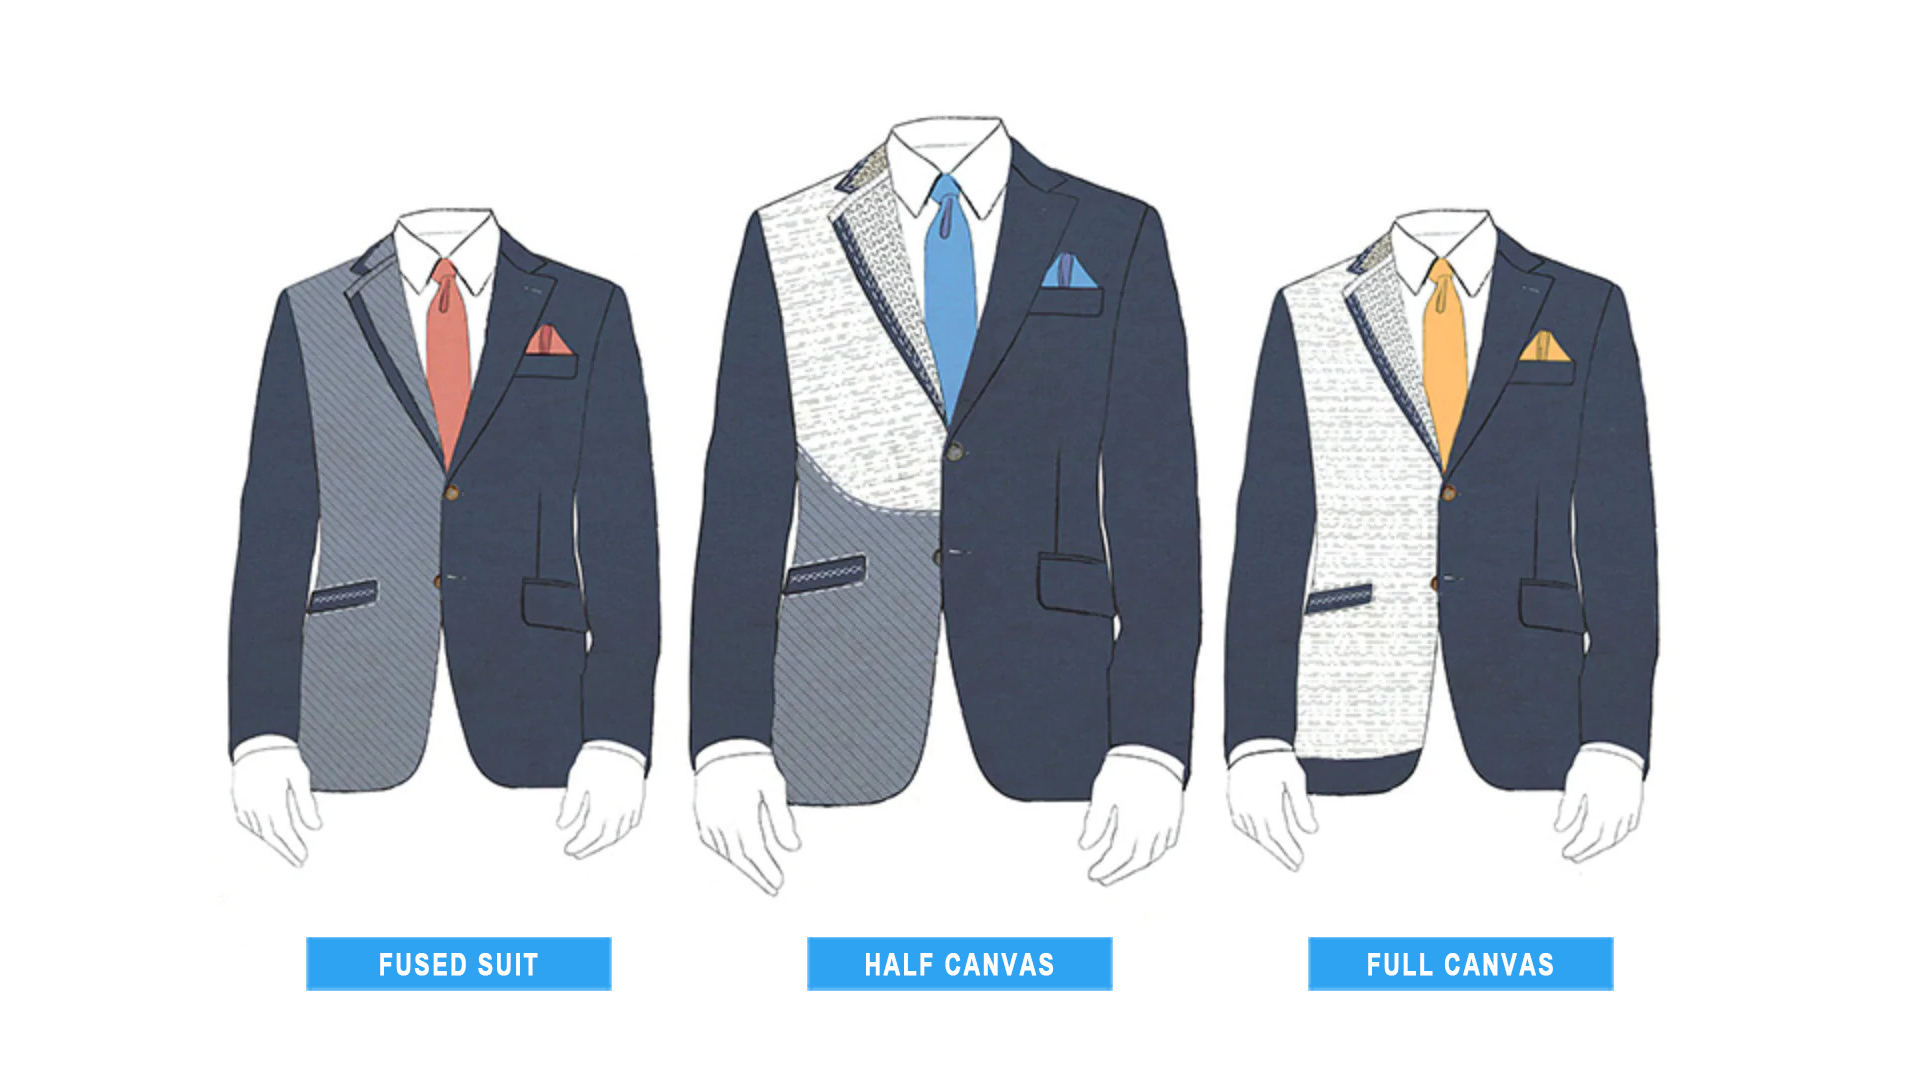 fused suit vs. canvassed suit